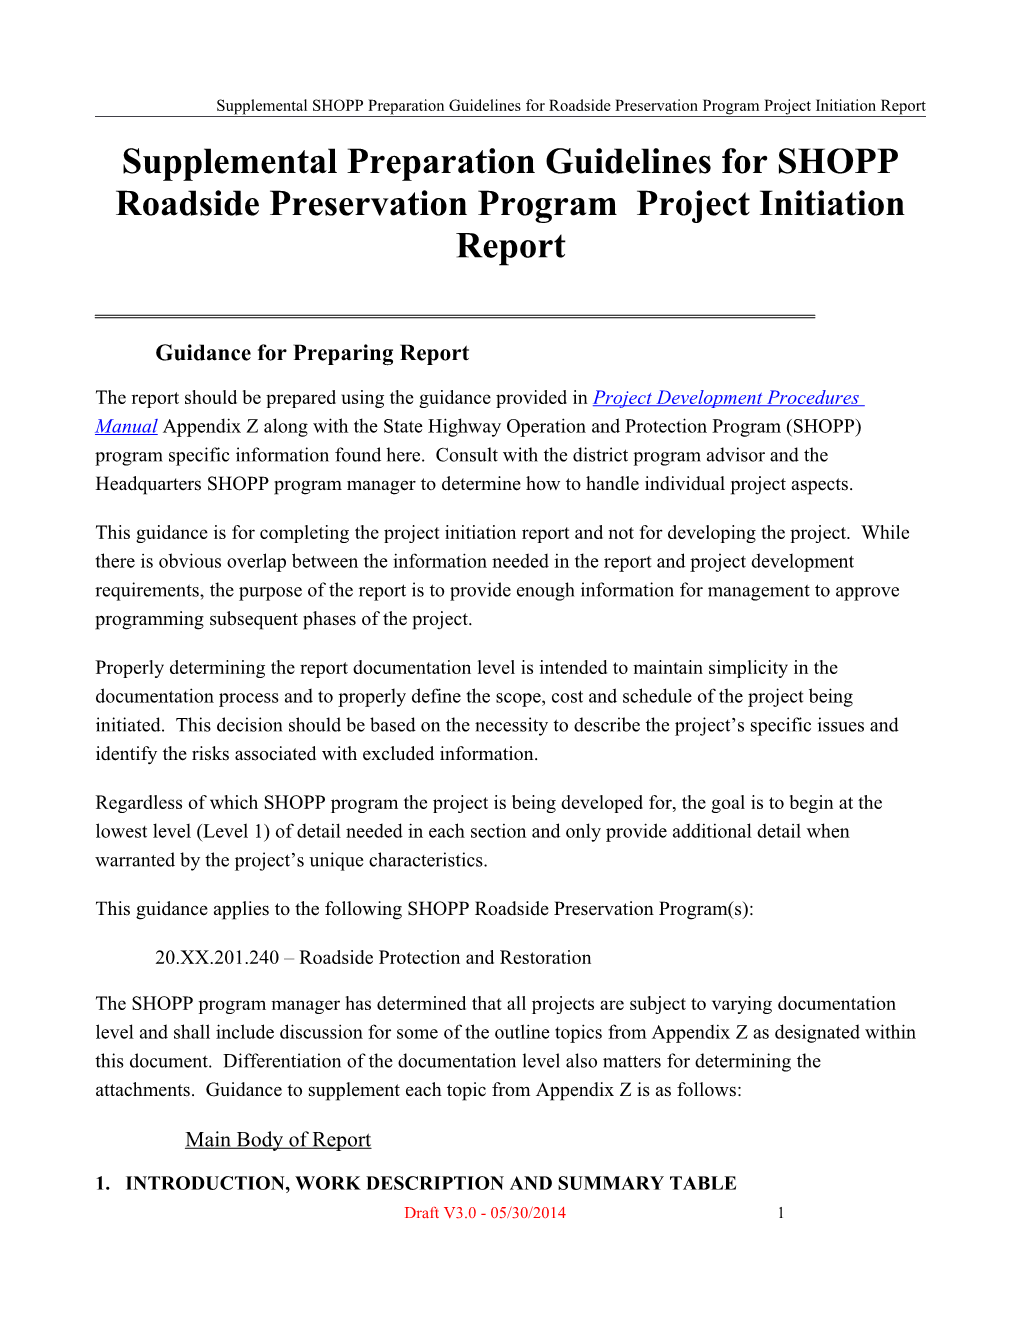 Supplemental SHOPP Preparation Guidelines for Roadside Preservationprogramproject Initiation